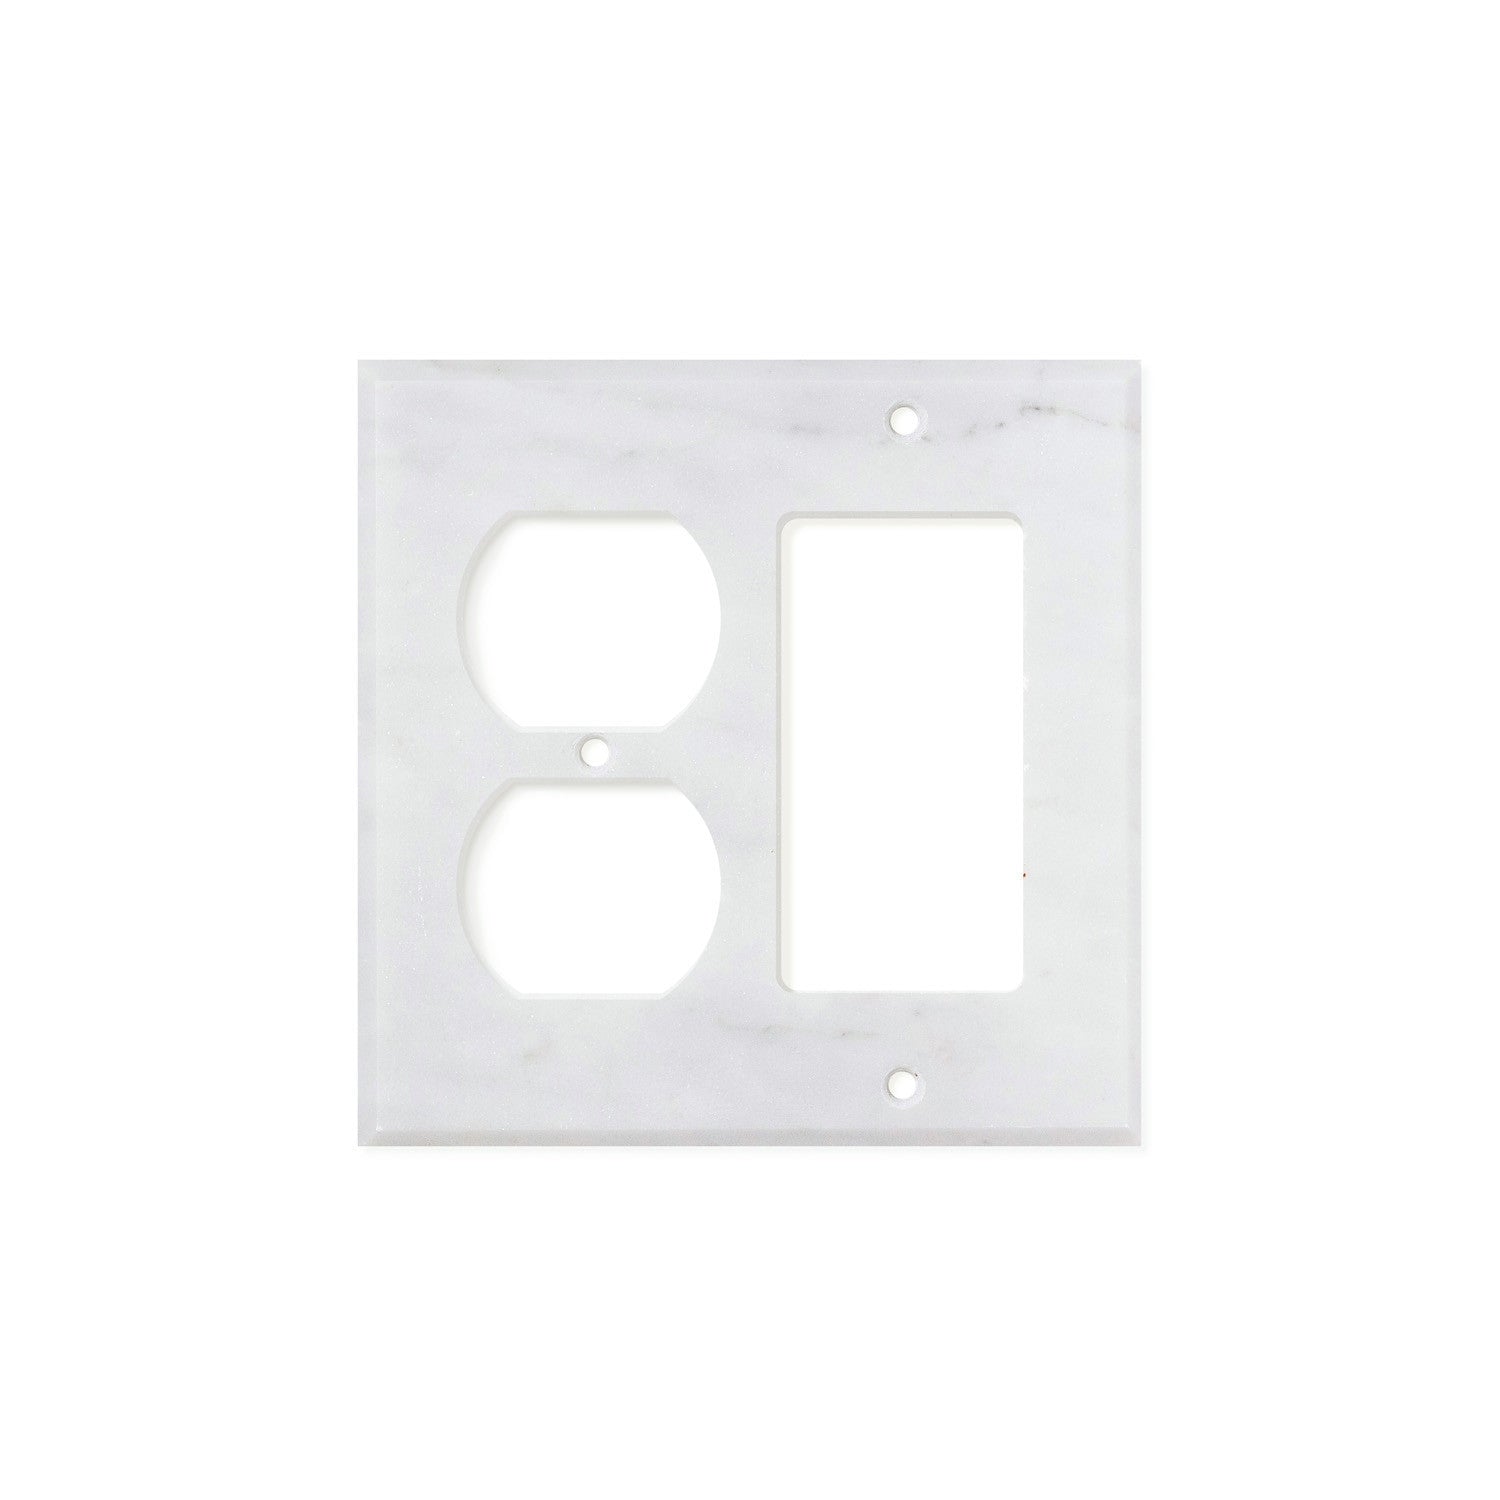 Bianco Carrara (Carrara White) Marble Switch Plate Cover, Polished (ROCKER DUPLEX) - Tilephile